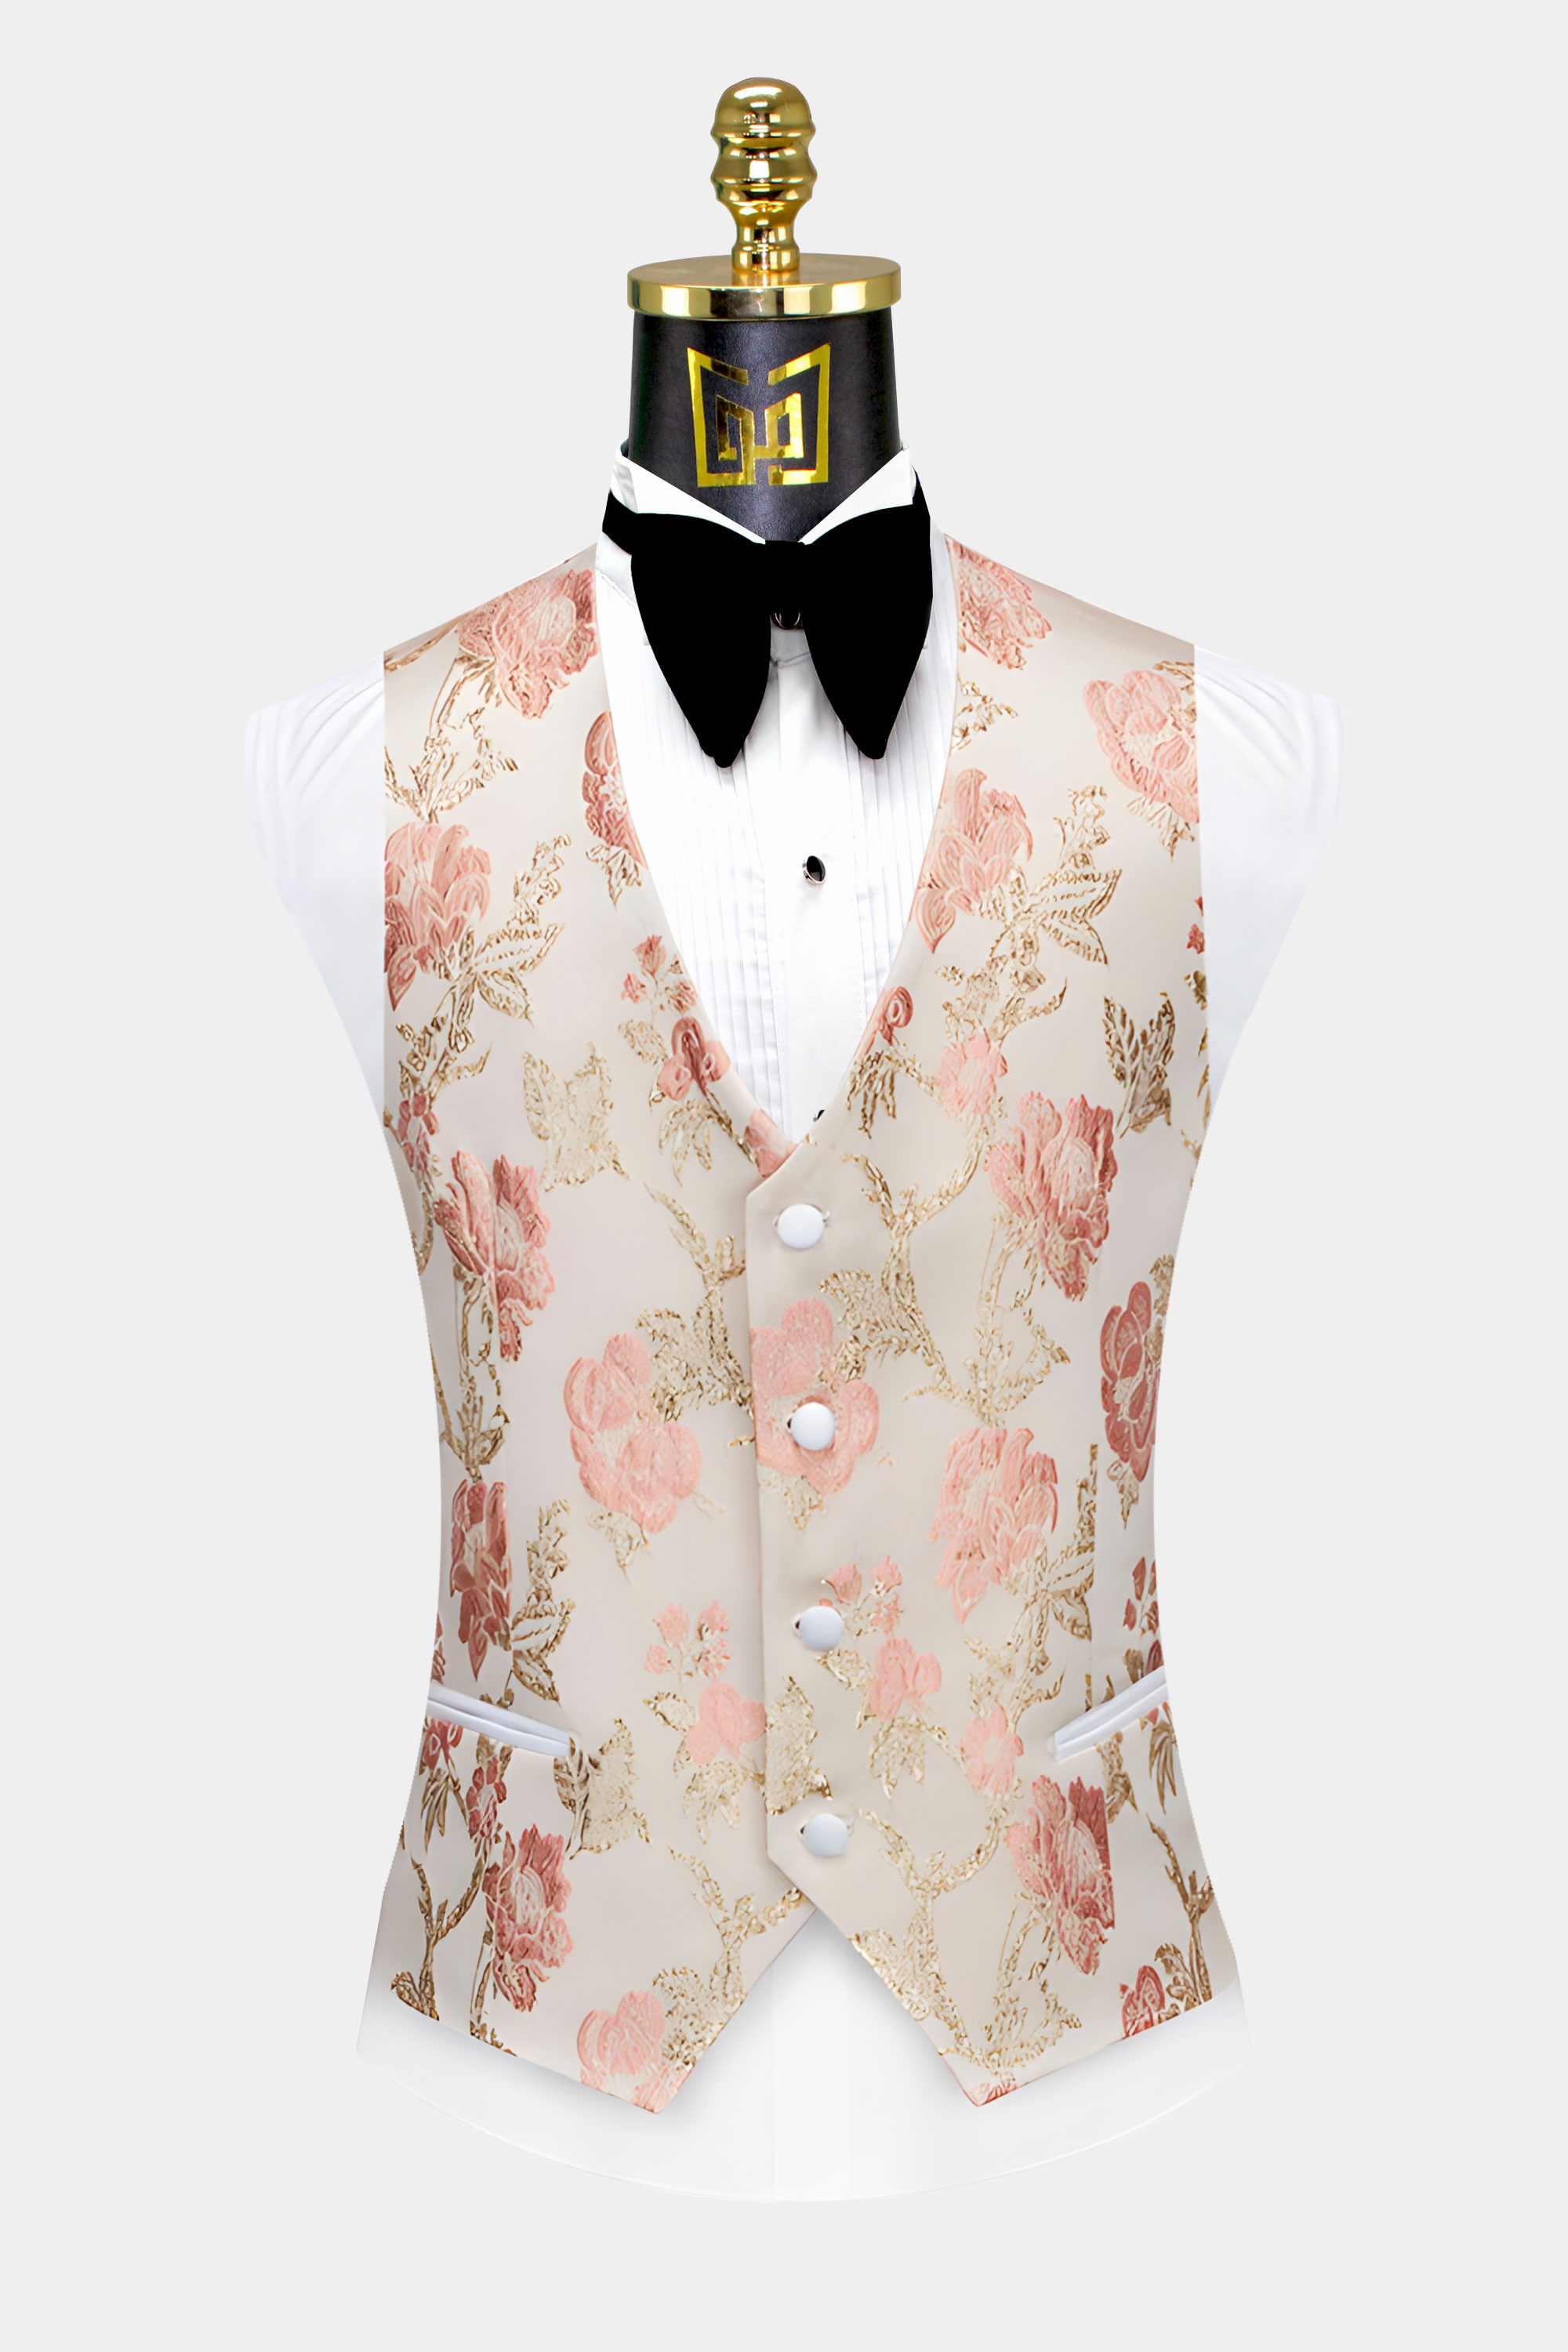 Rose-Gold-and-White-Tuxedo-Vest-from-Gentlemansguru.com